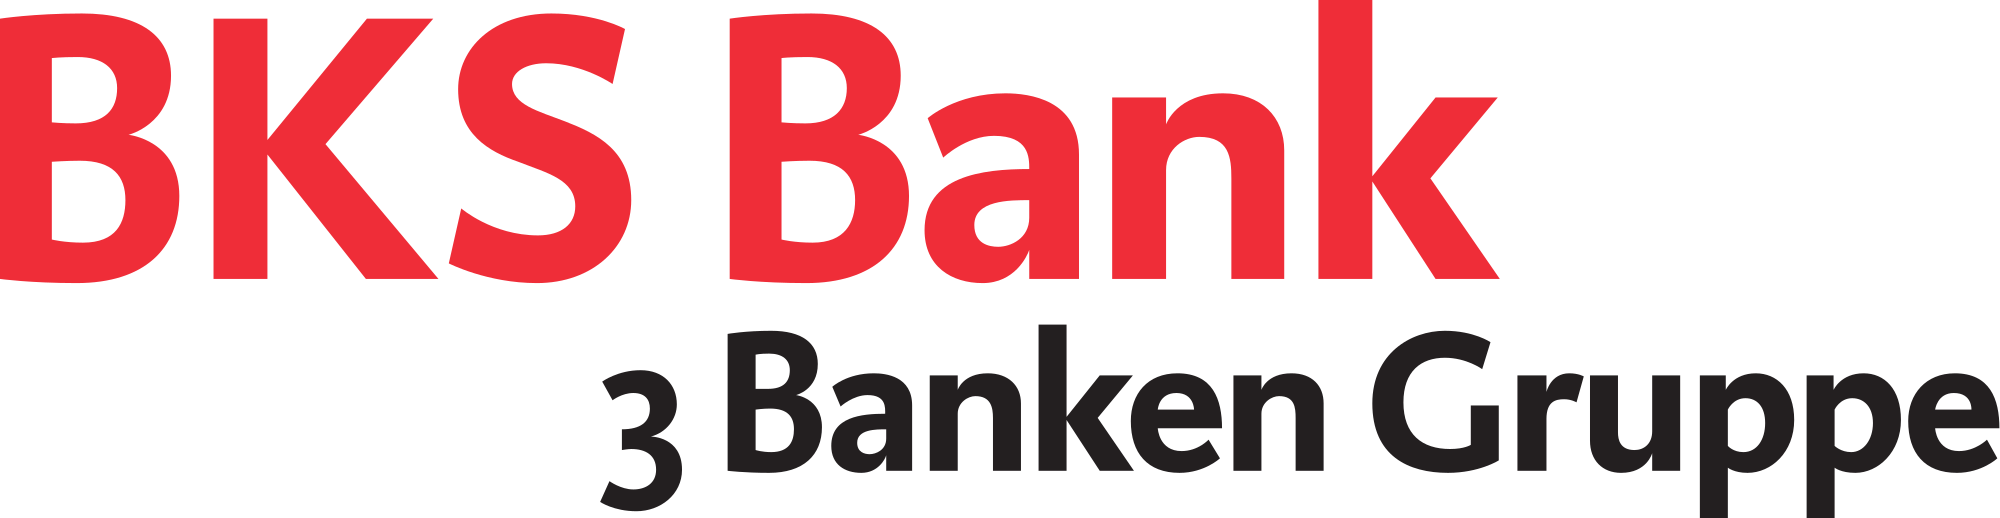 Open - Bks Bank Ag Logo (2000x518)